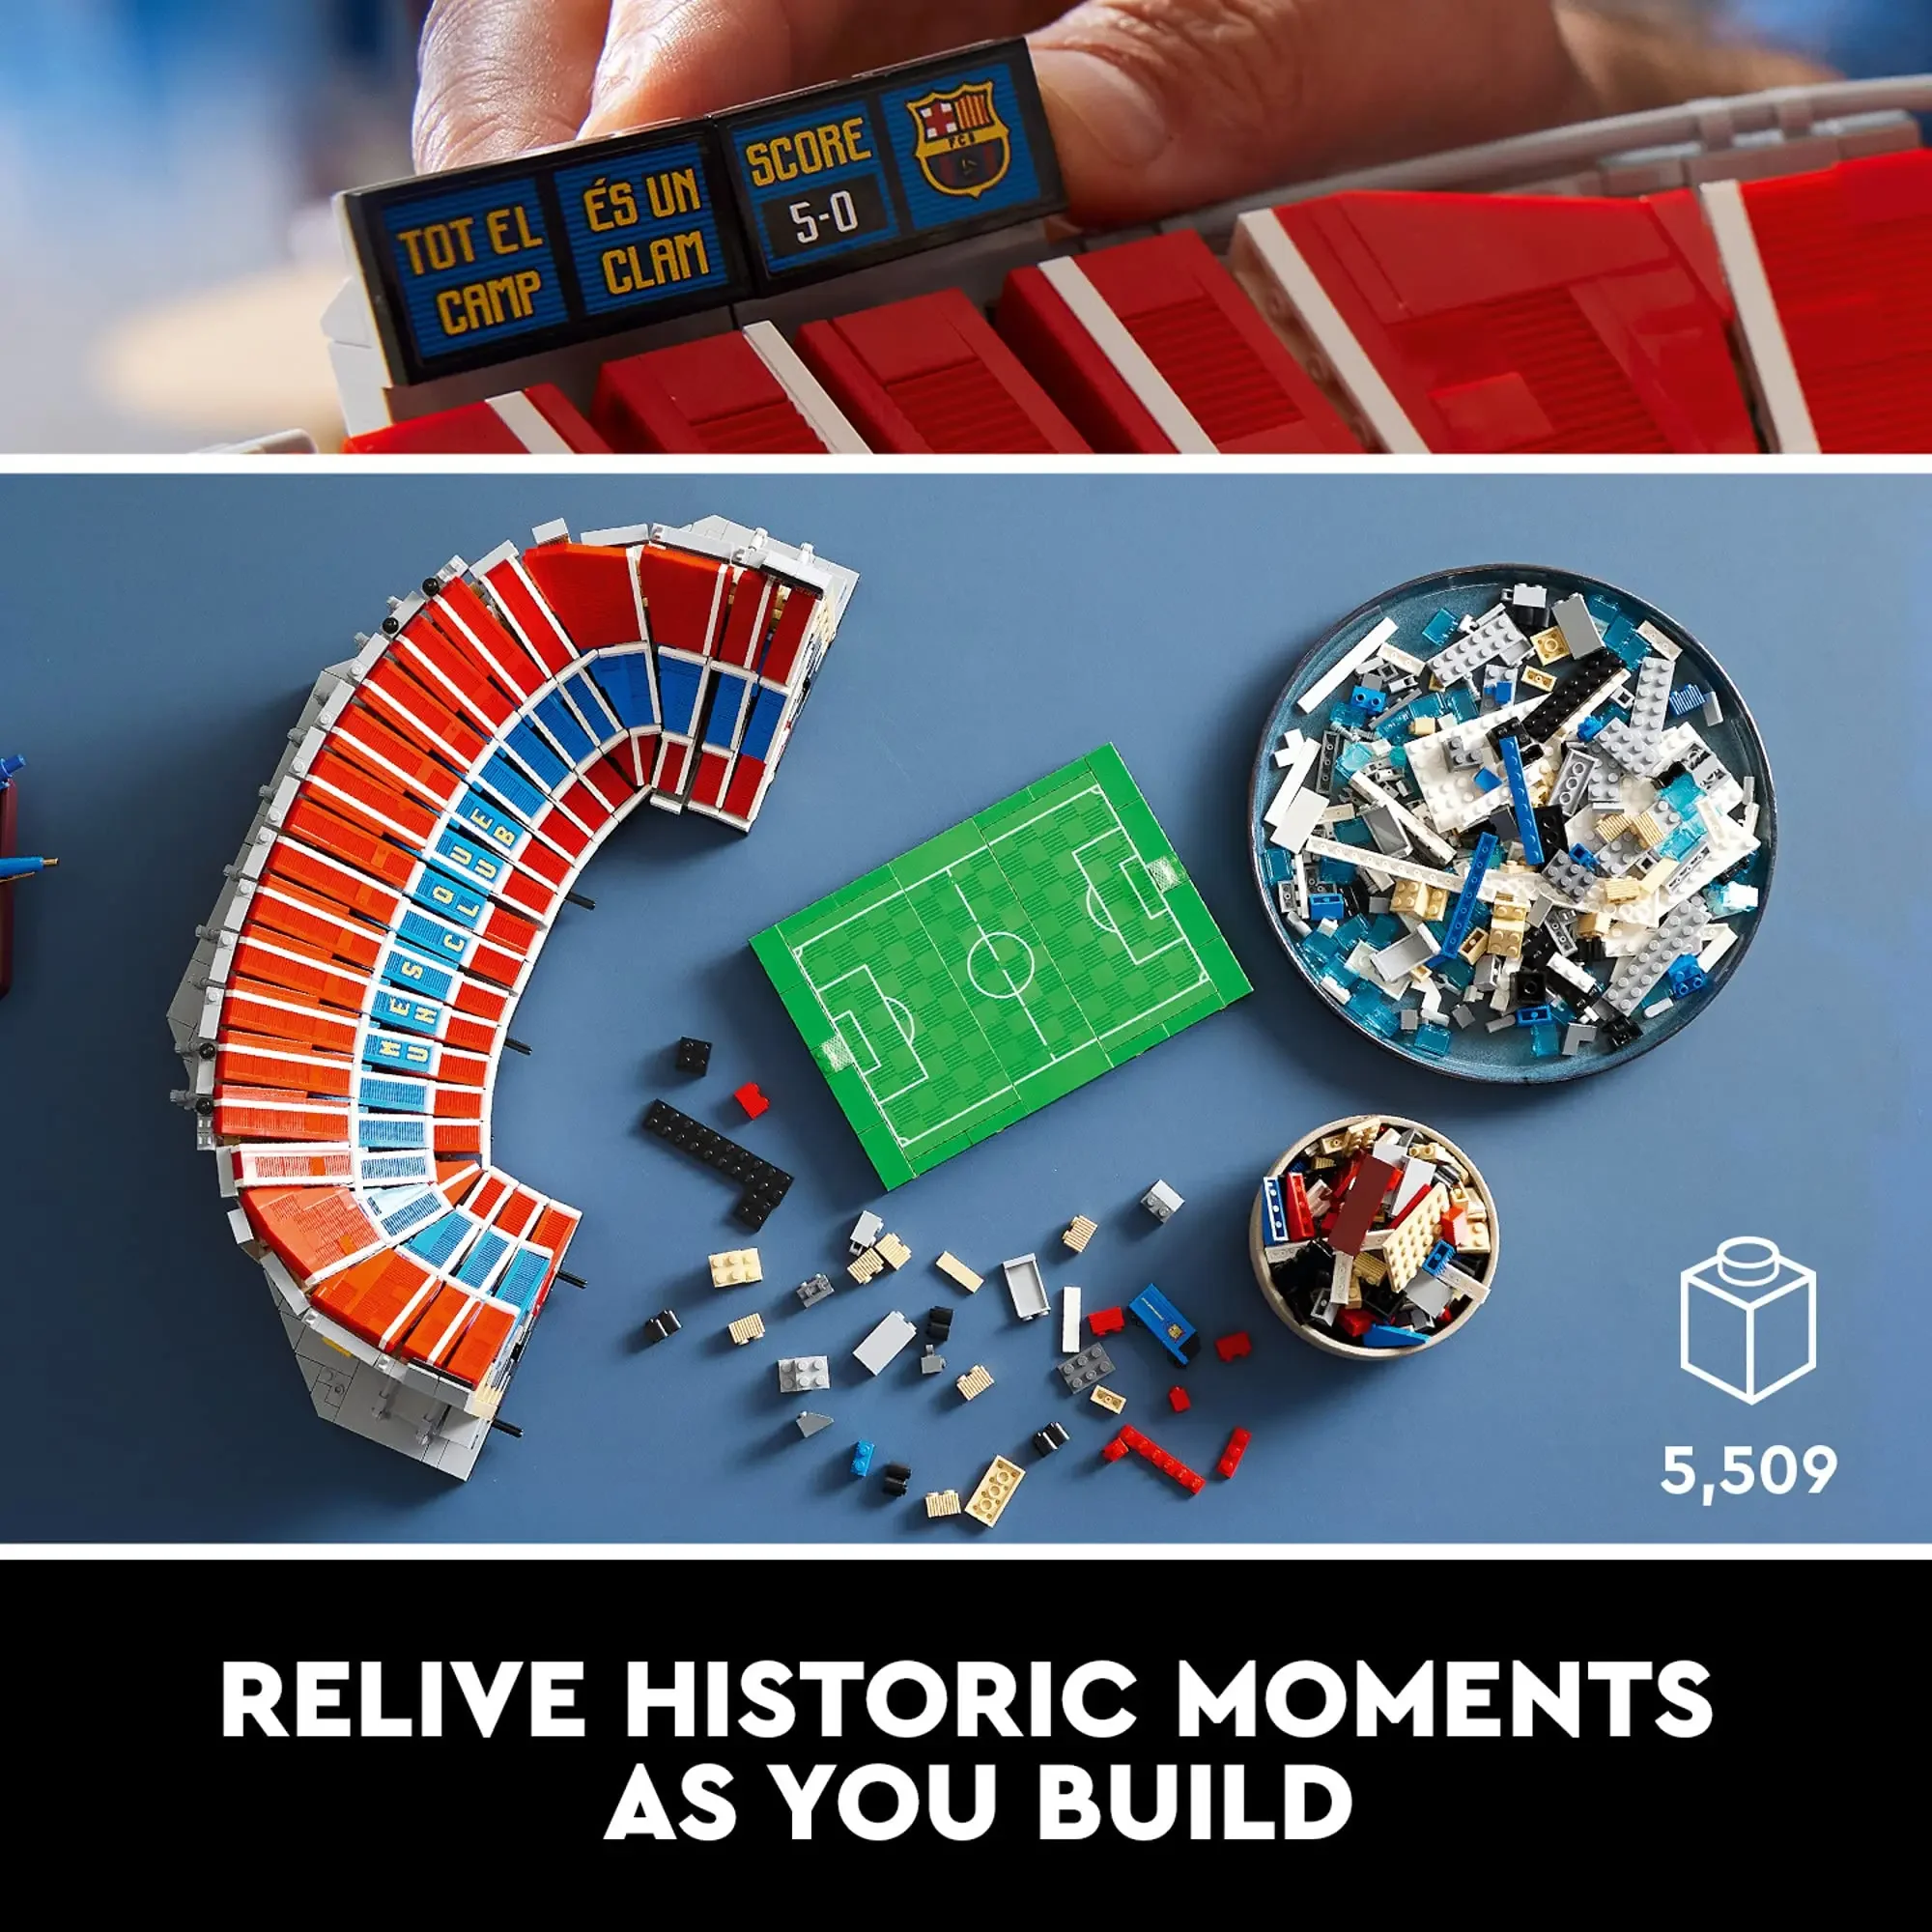 LEGO Icons Camp NOU FC Barcelona Soccer Stadium 10284 Model Building Kit  Large Construction Set for Adult Xmas Gift (5509Pieces)